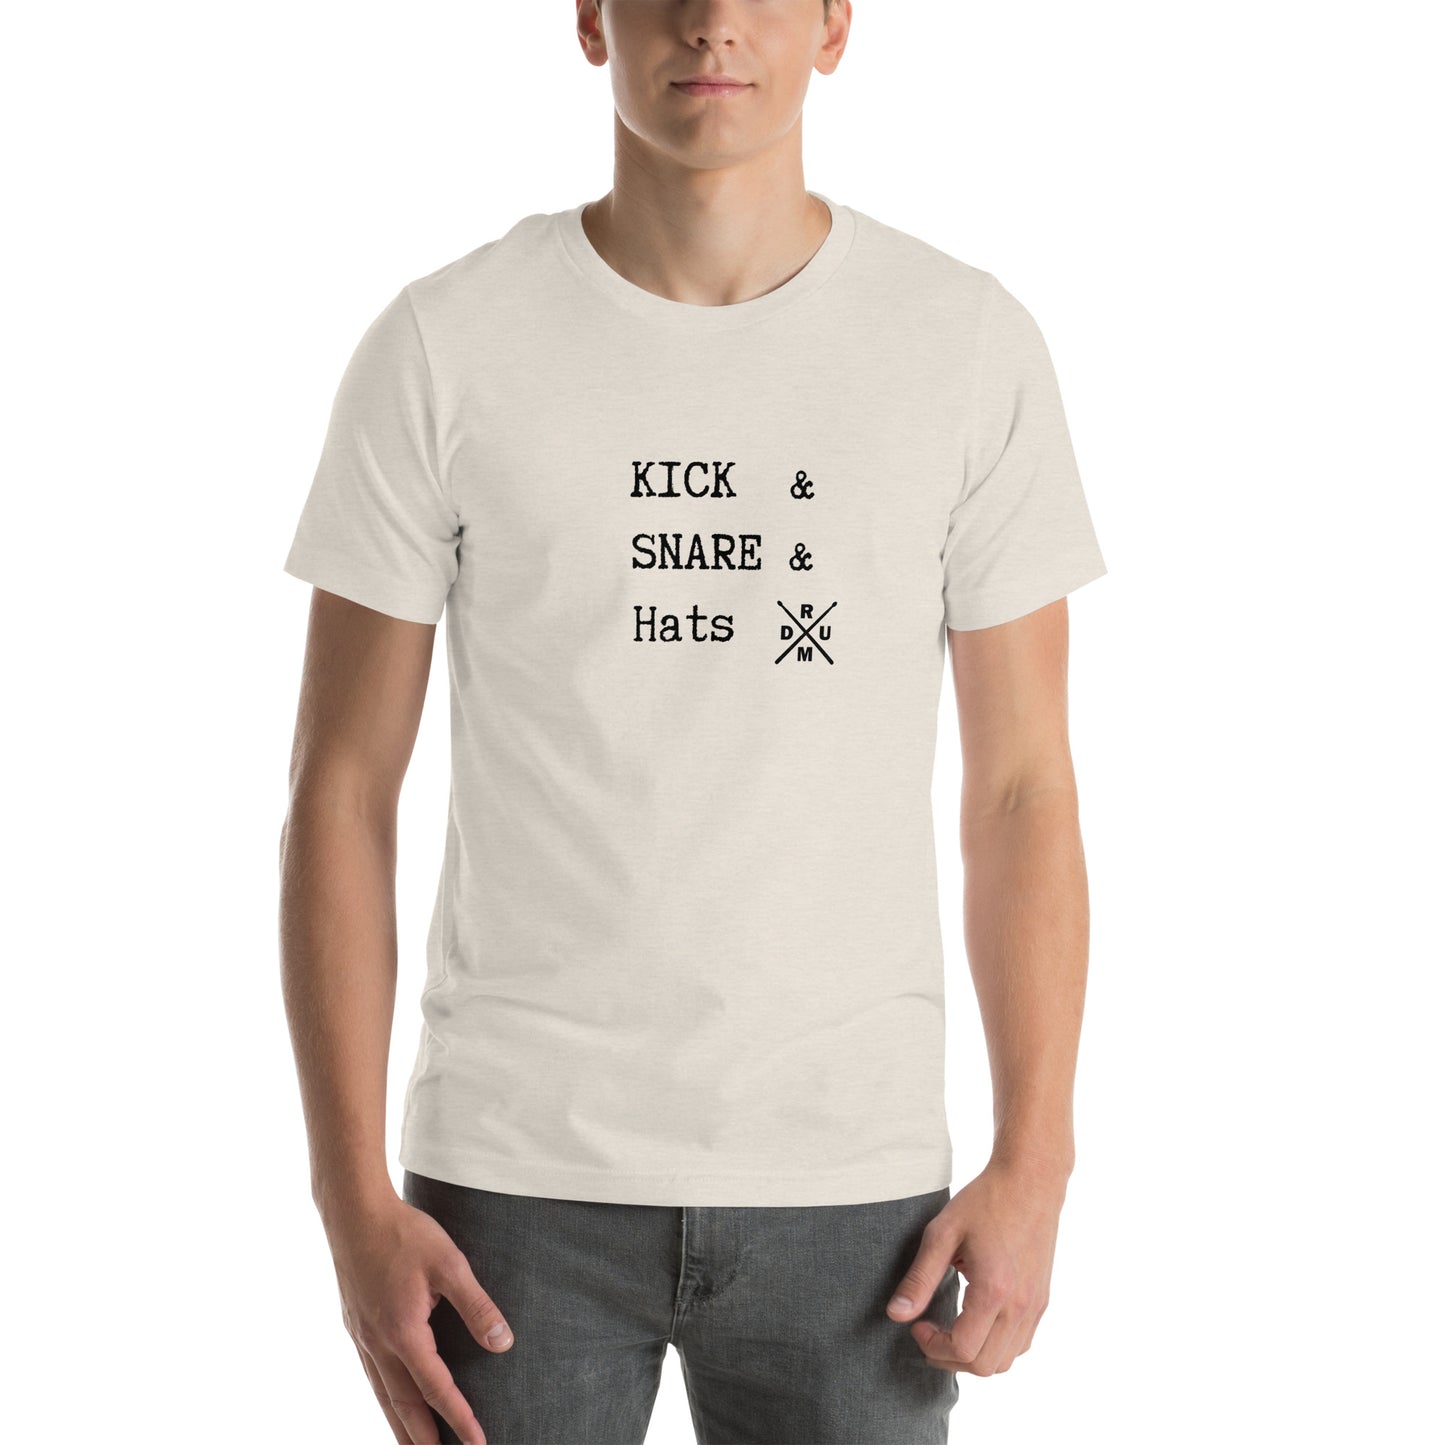 Kick & Snare & Hats Drum Shirt